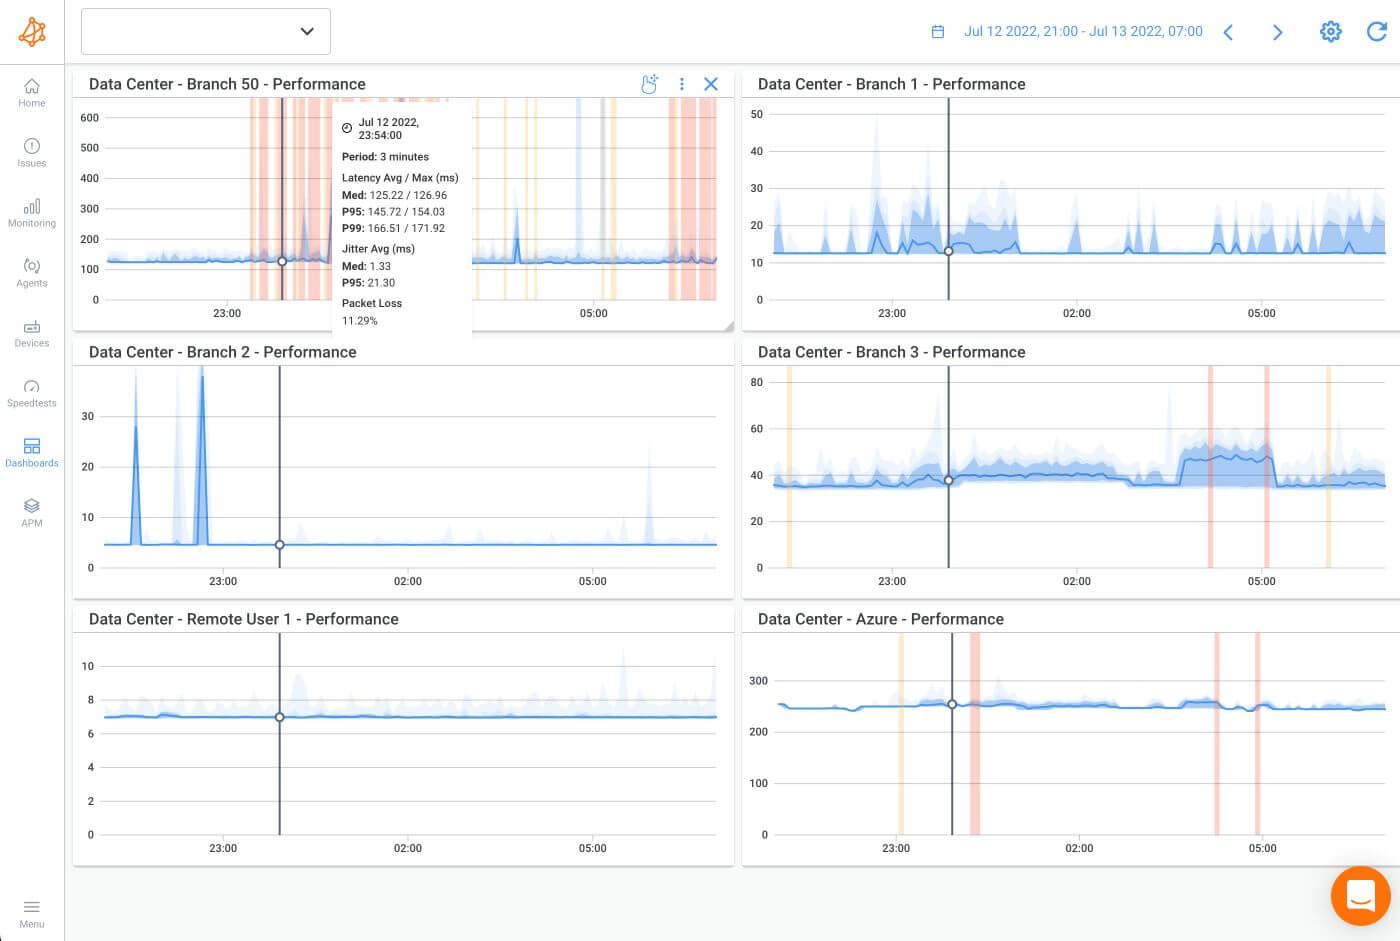 Obkio Network Monitoring App Dashboard - Digital Experience Monitoring Tools